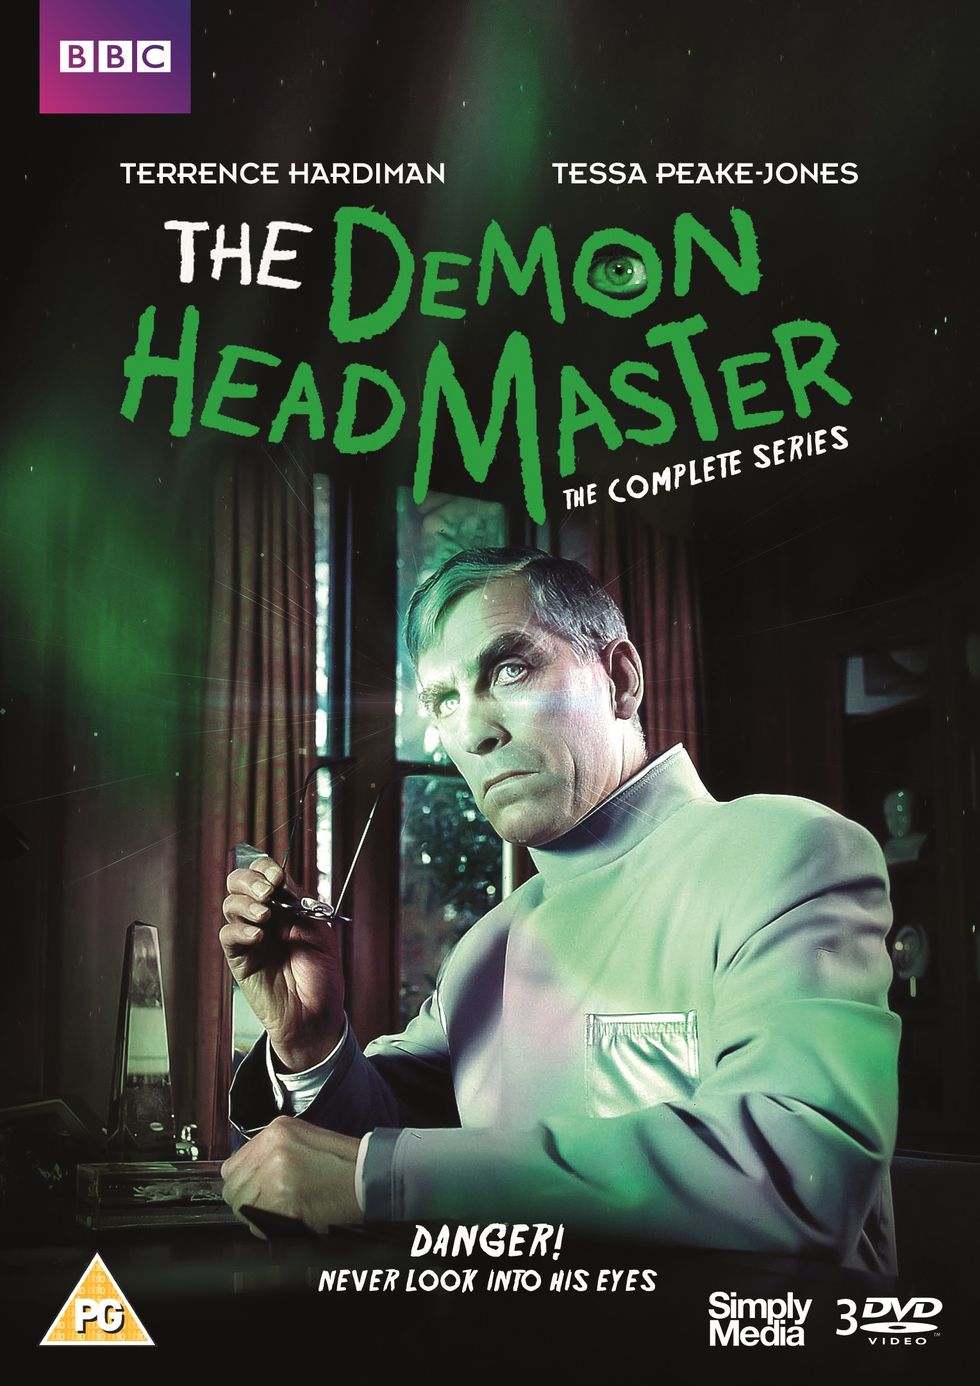 The Demon Headmaster complete series on DVD